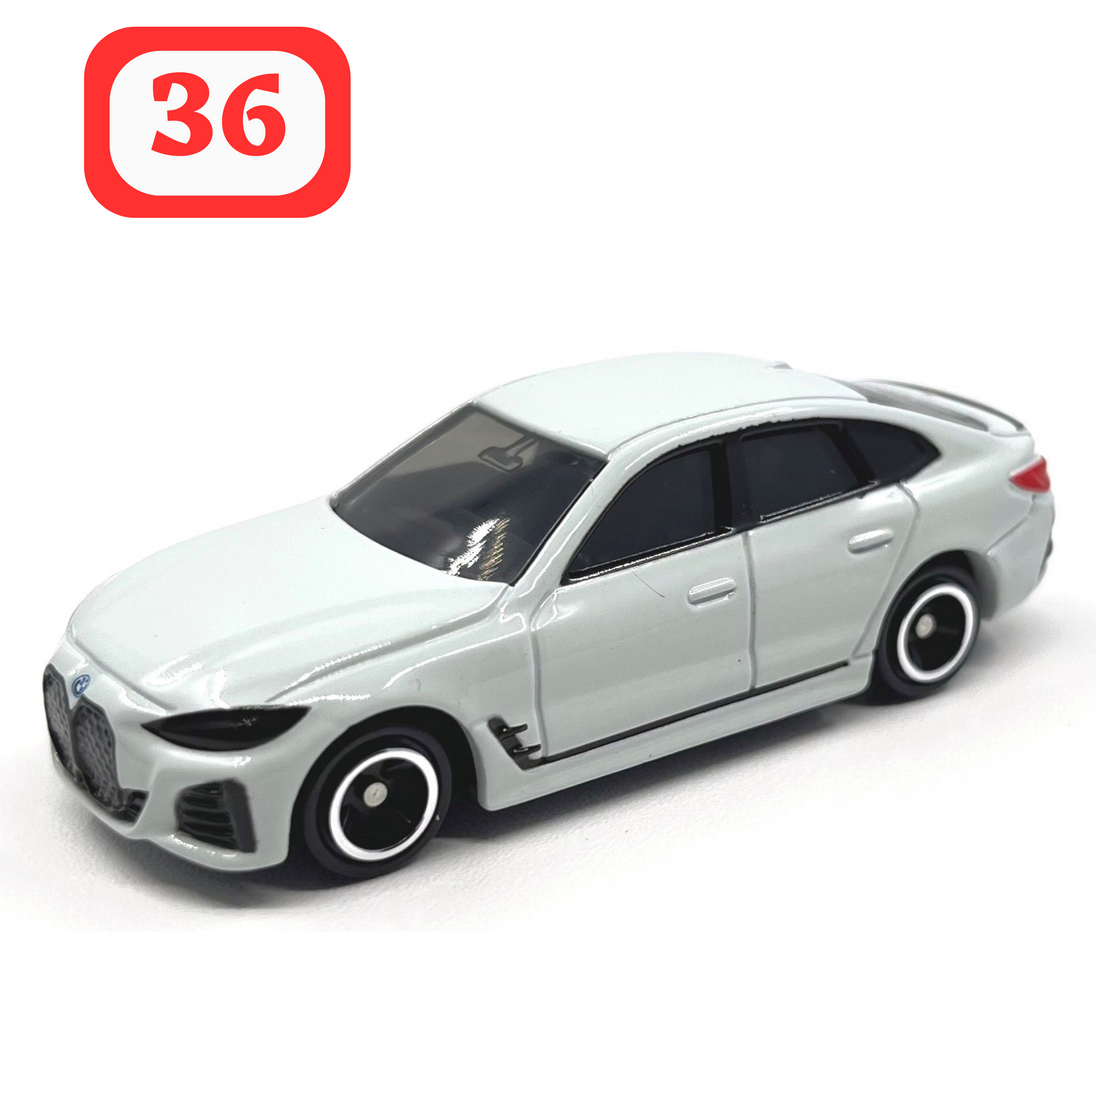 1:65 BMW i4 Alloy Tomica Diecast Car Model by Takara Tomy